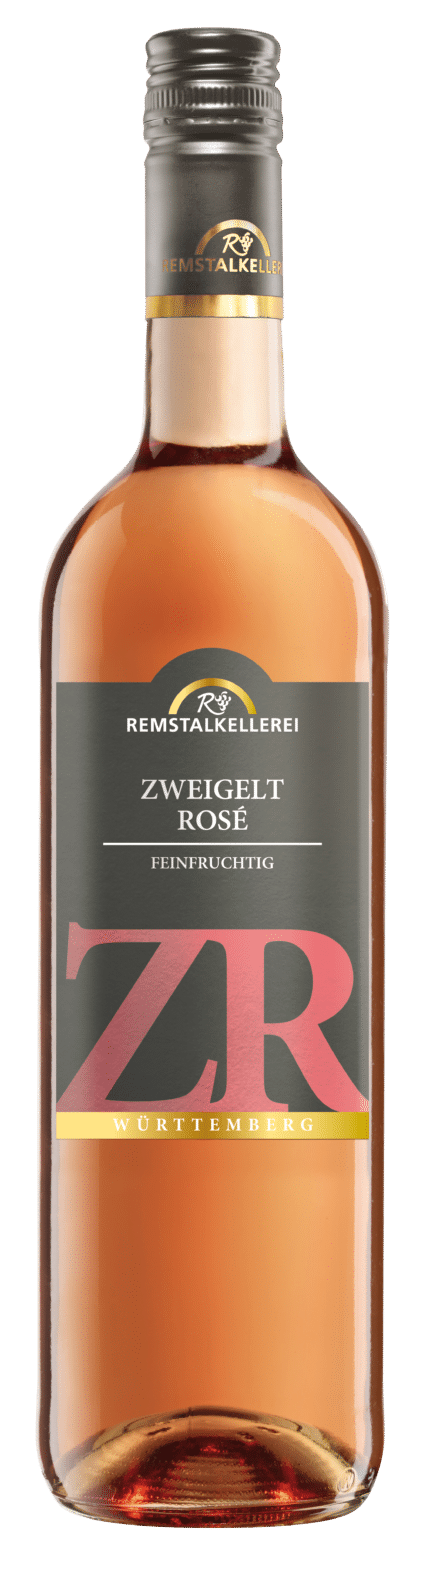 Zweigelt Rosé feinfruchtig (2017)_Remstalkellerei eG